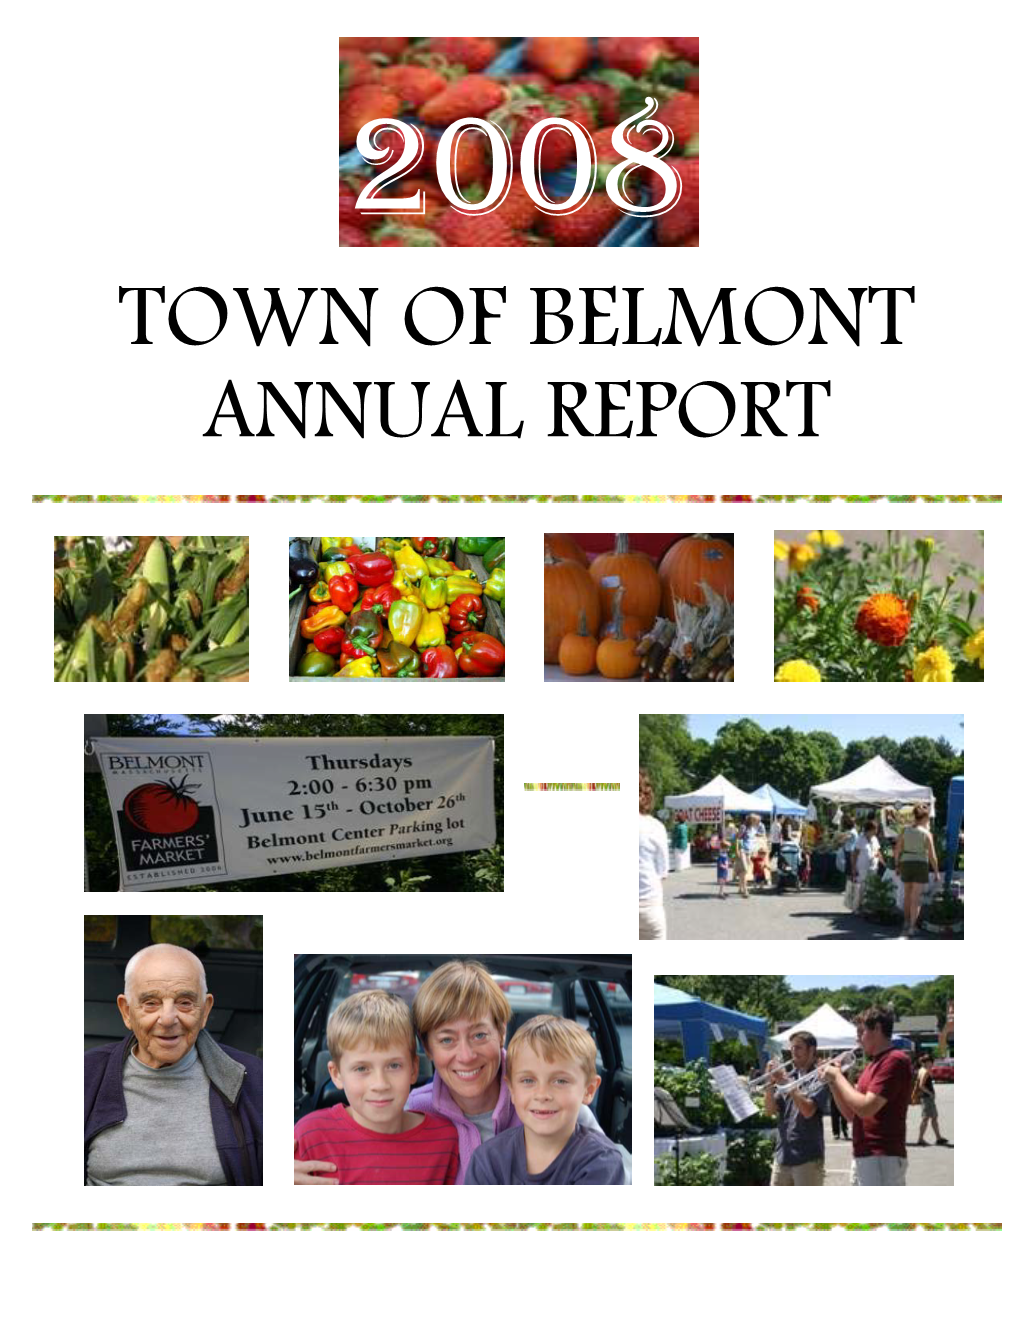 2008 Annual Report, Town of Belmont BOARD of SELECTMEN